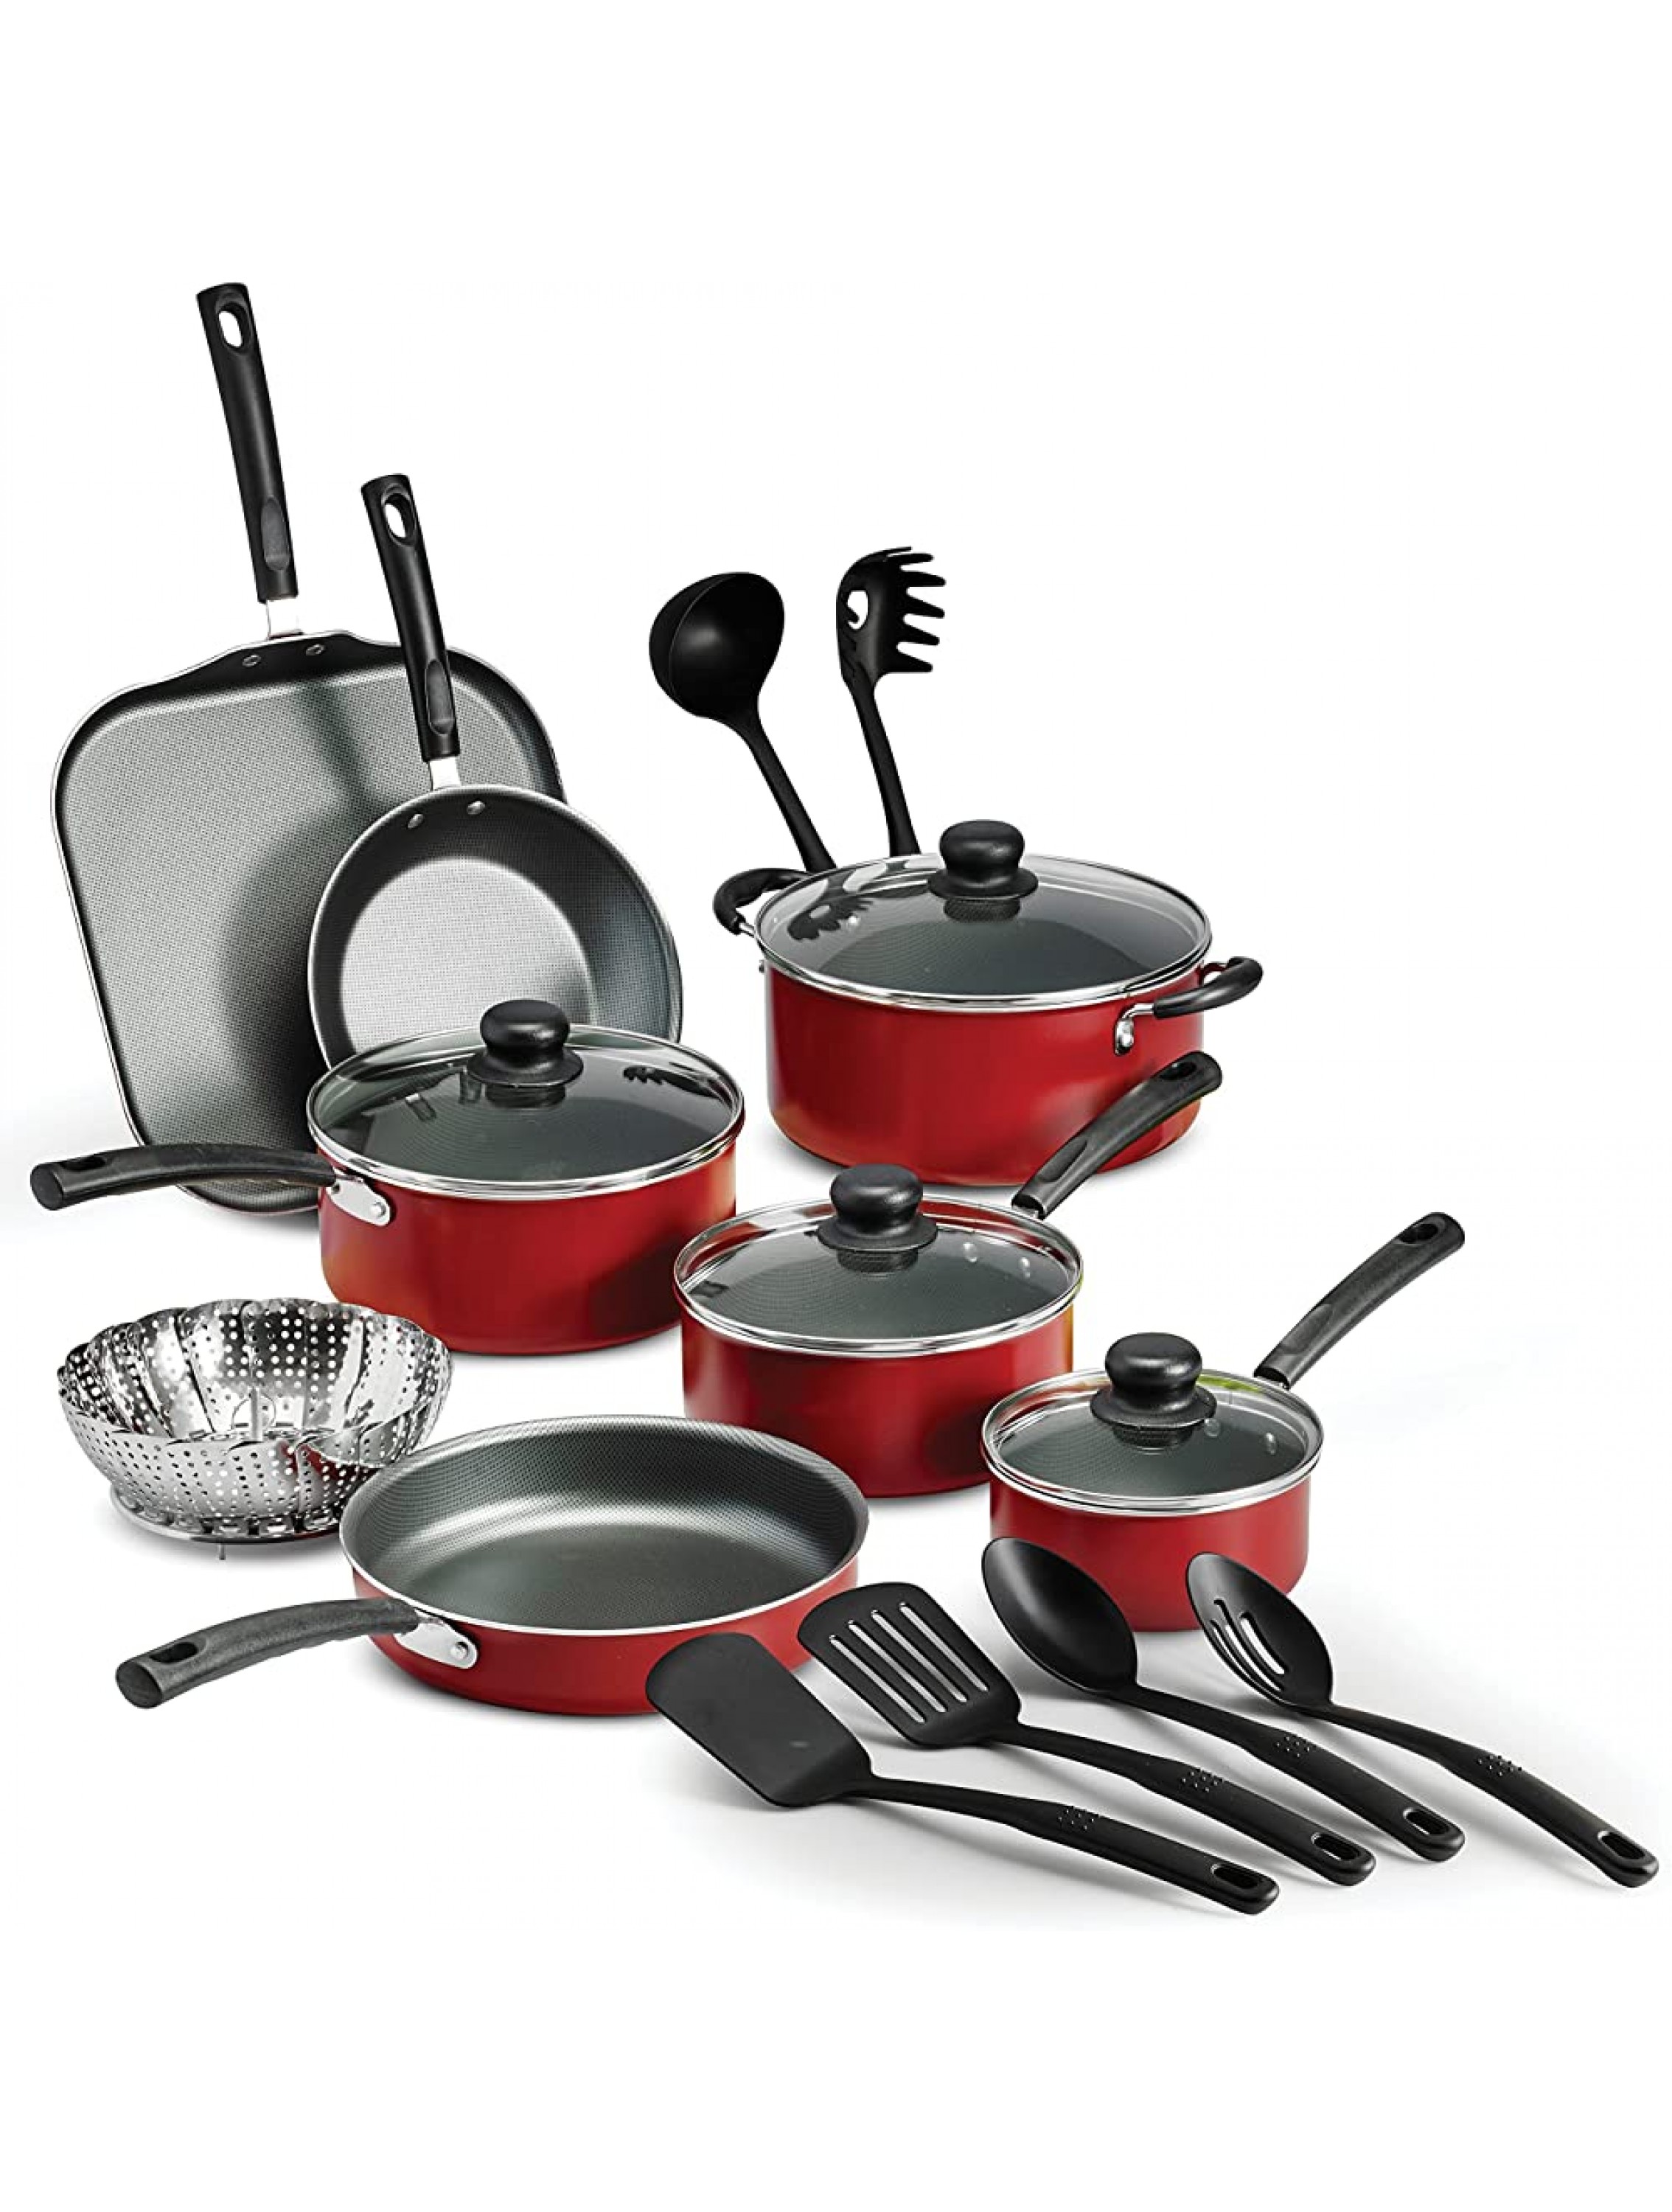 LEGENDARY-YES 18 Piece Nonstick Pots & Pans Cookware Set Kitchen Kitchenware Cooking NEW RED - BTWQ113O9